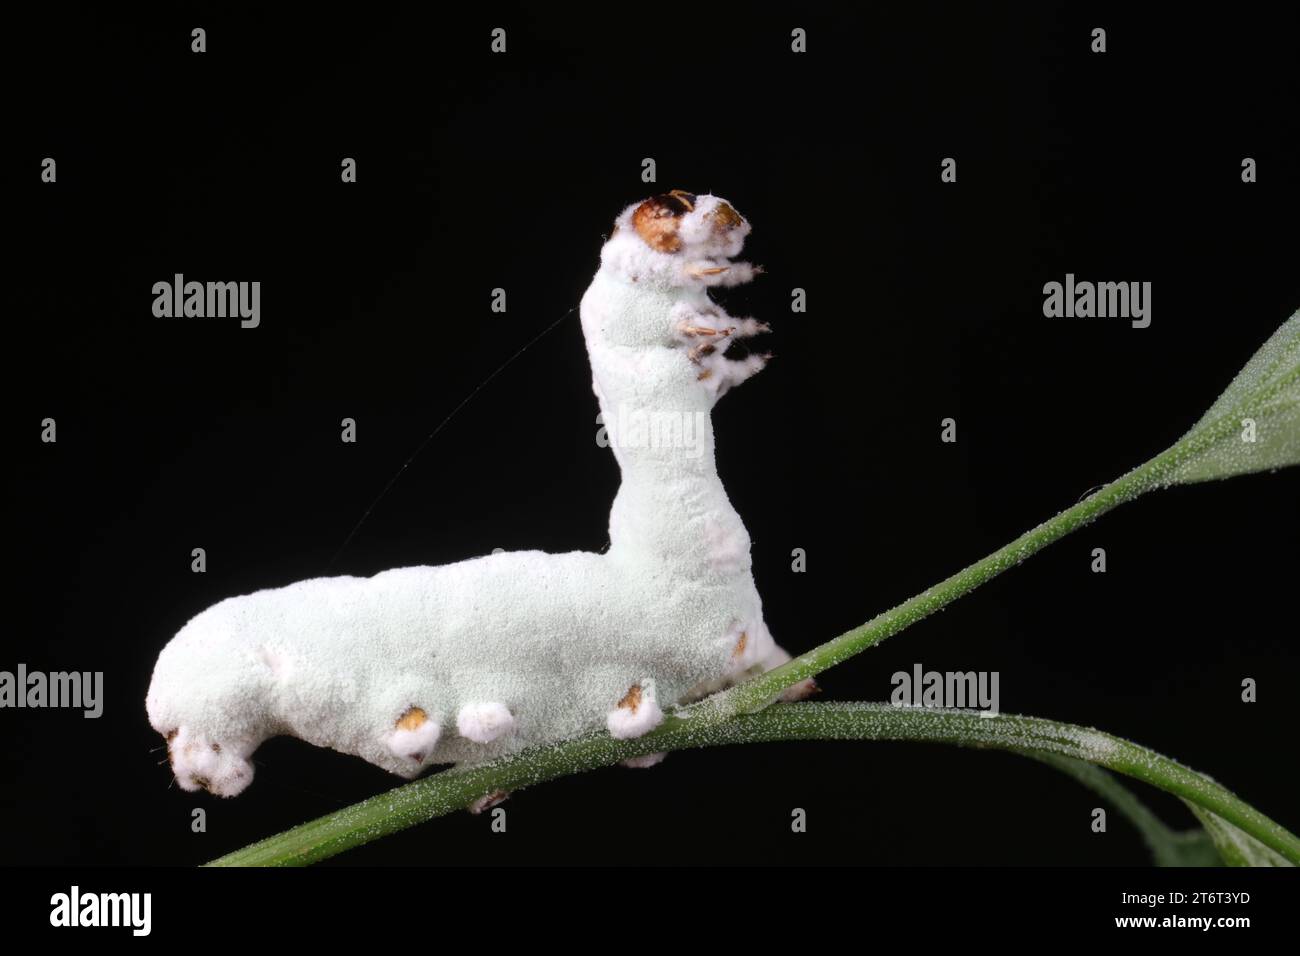 white silkworm in the wild Stock Photo